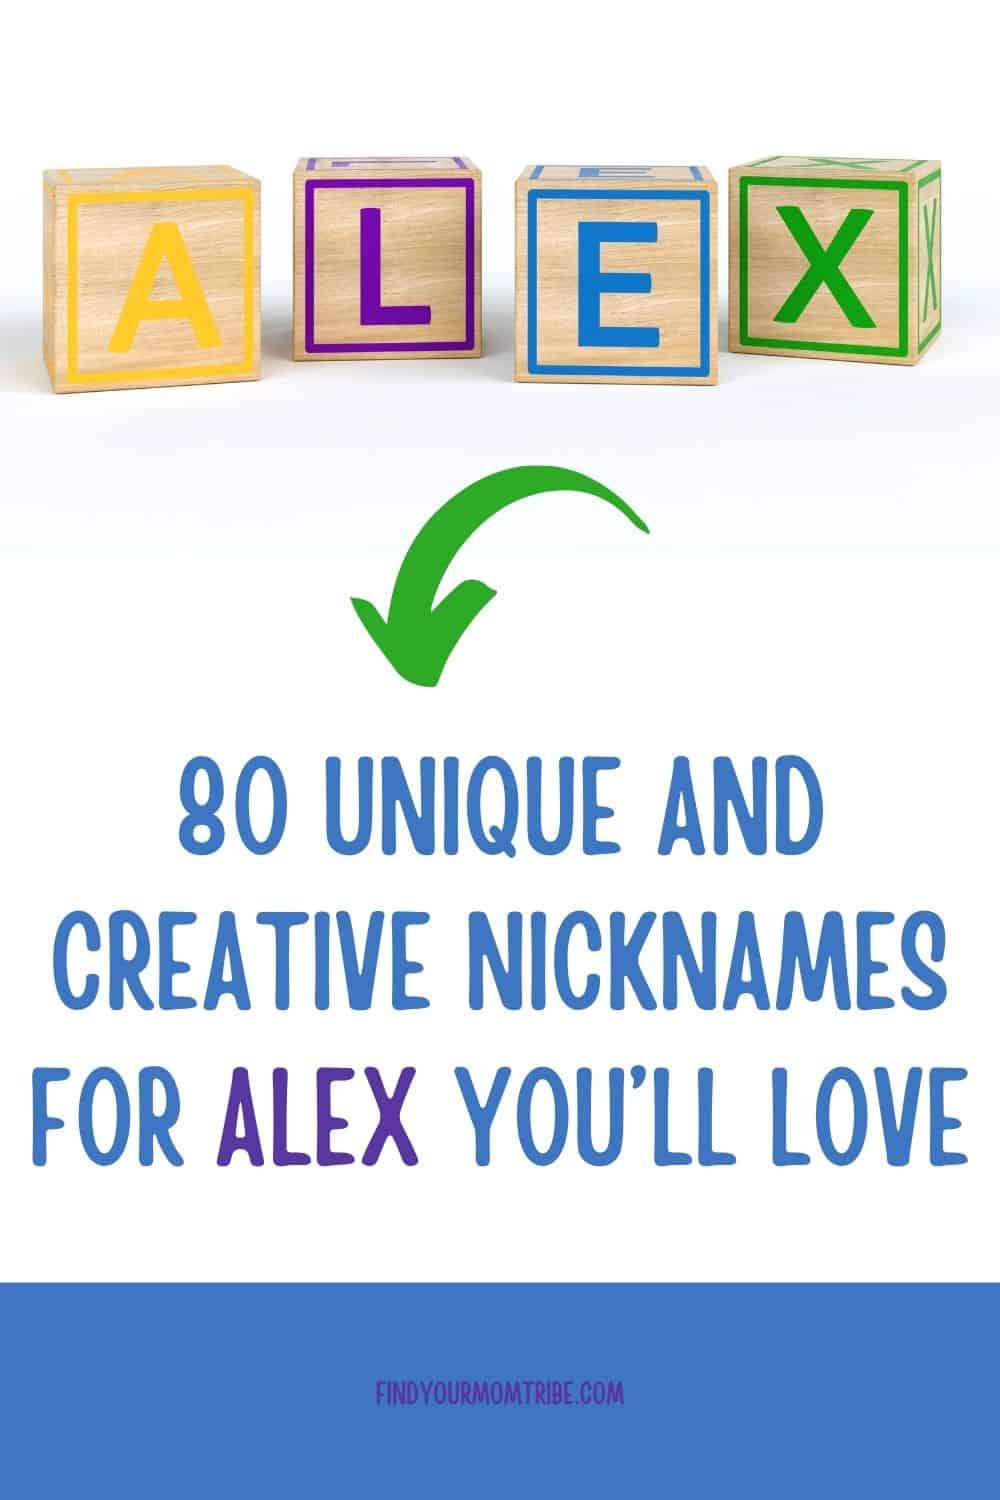  Pinterest nicknames for alex